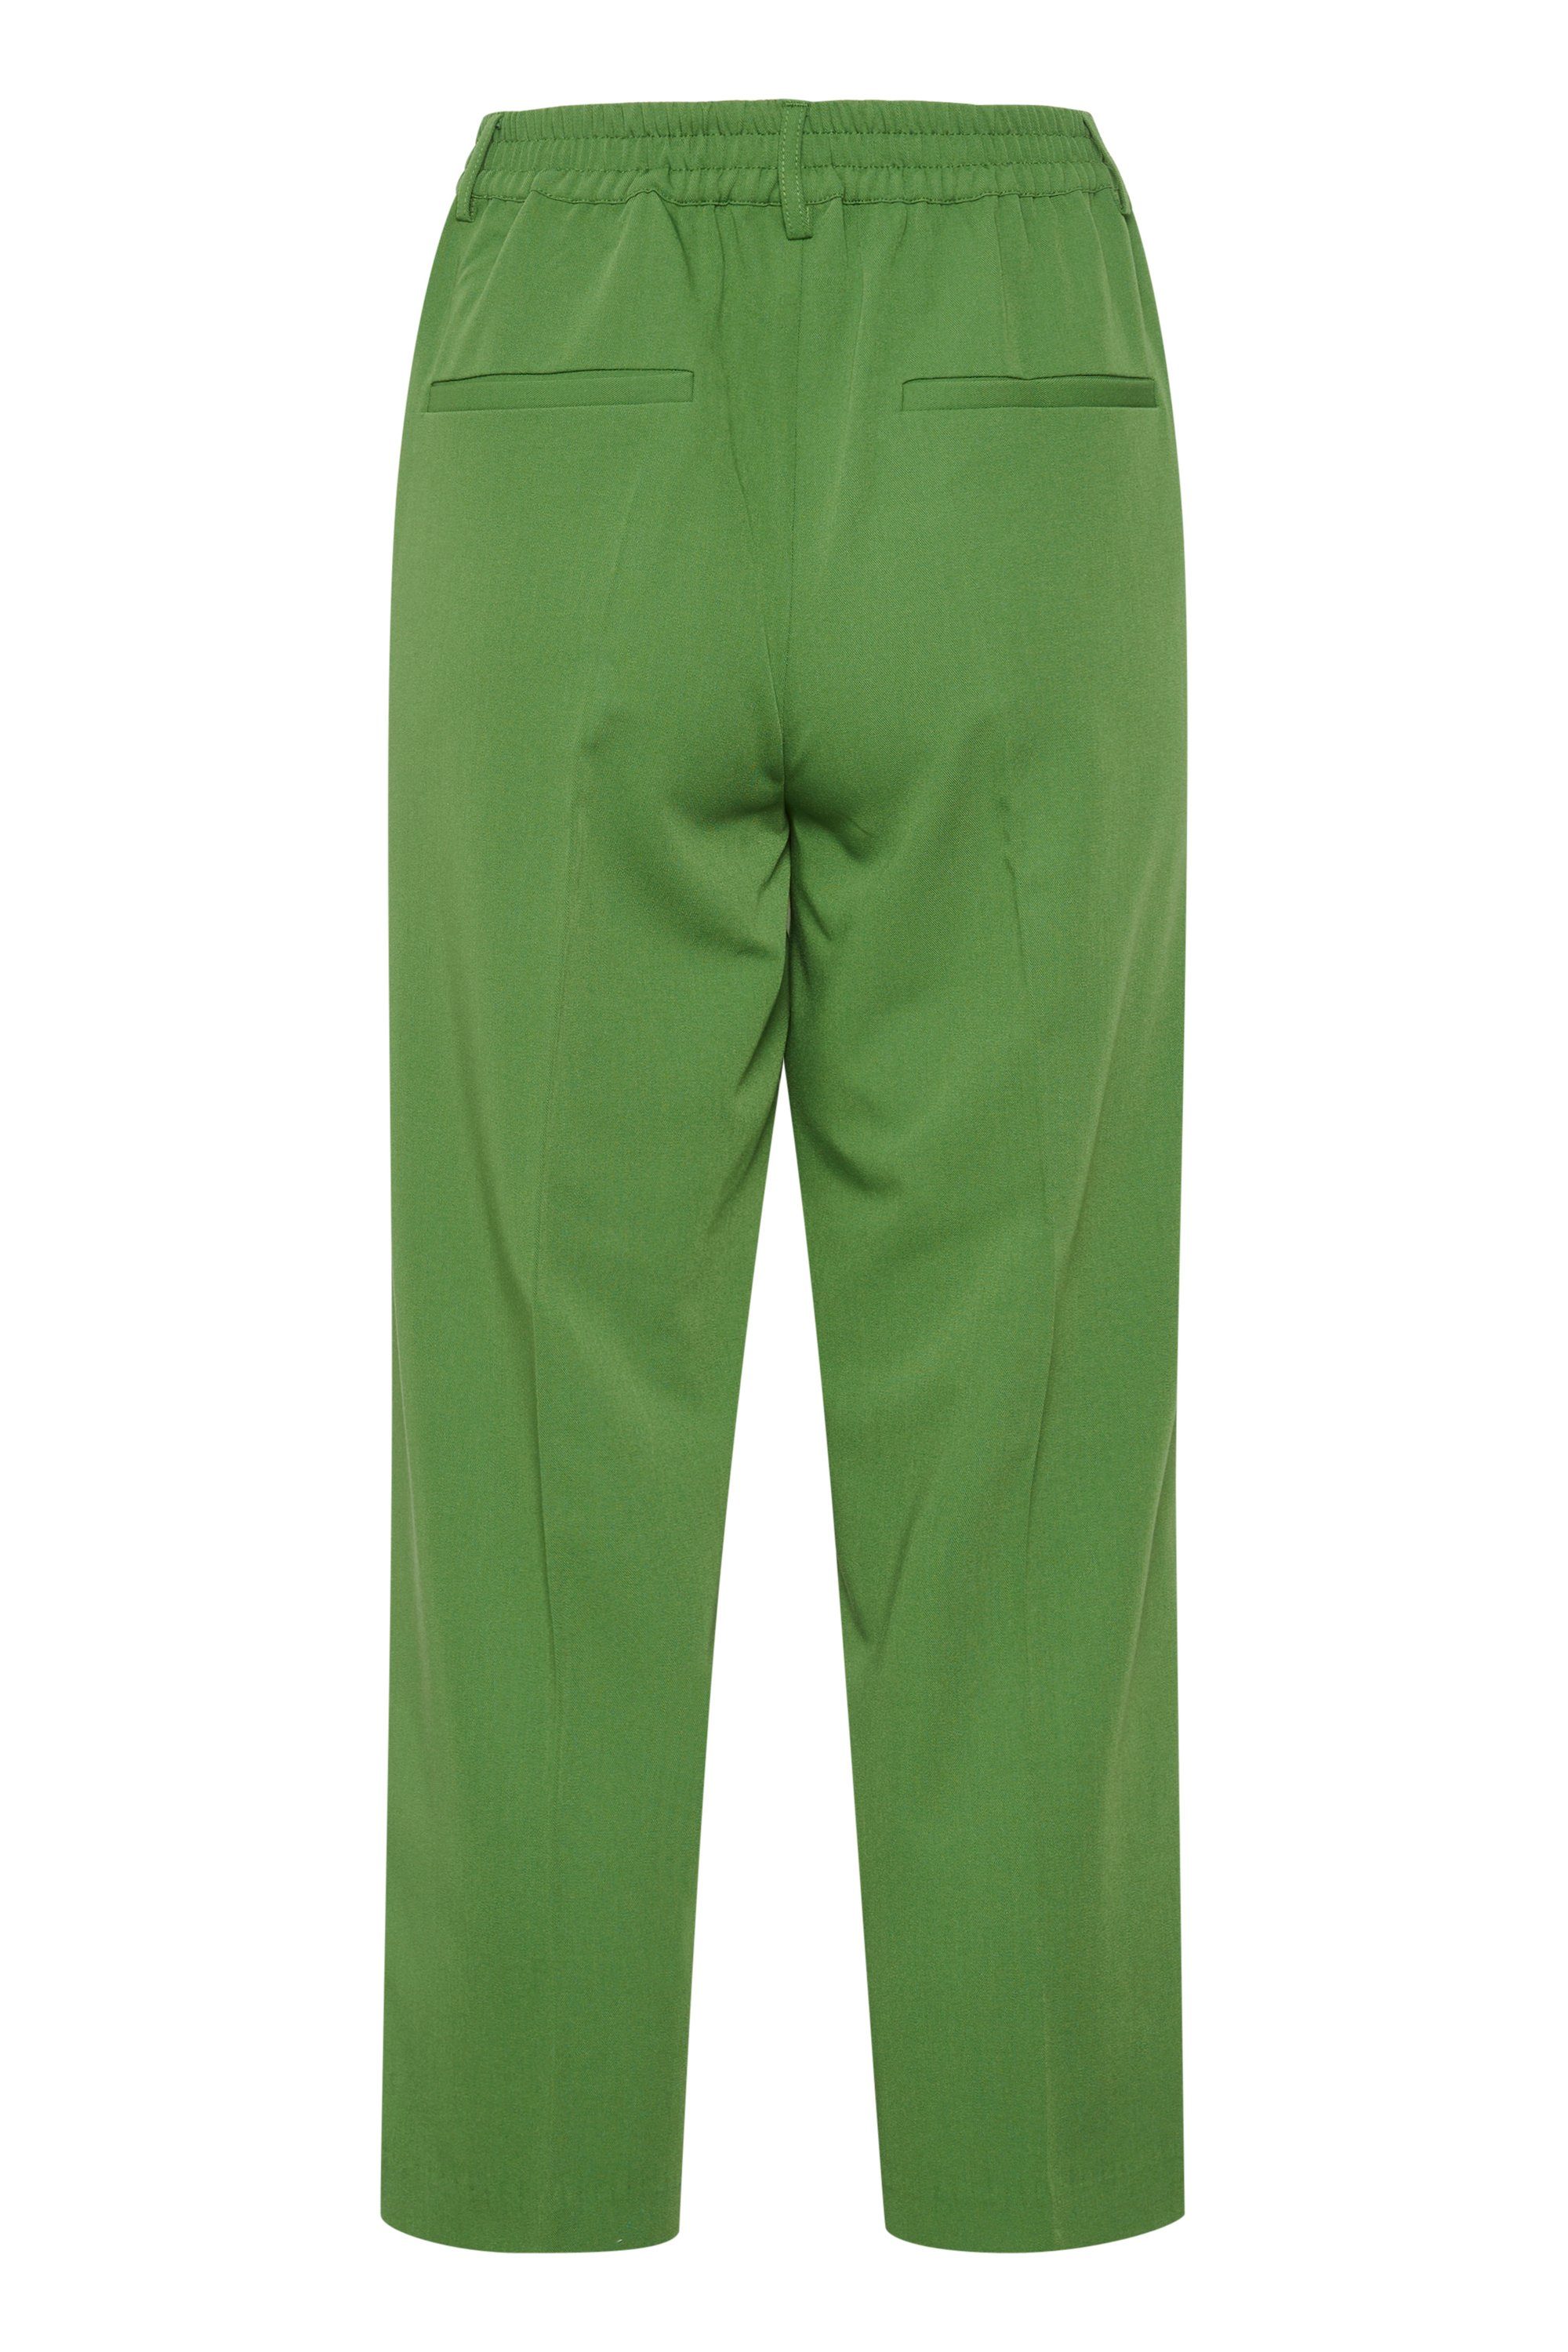 Suiting Artichoke KAFFE Green Pants Anzughose KAsakura